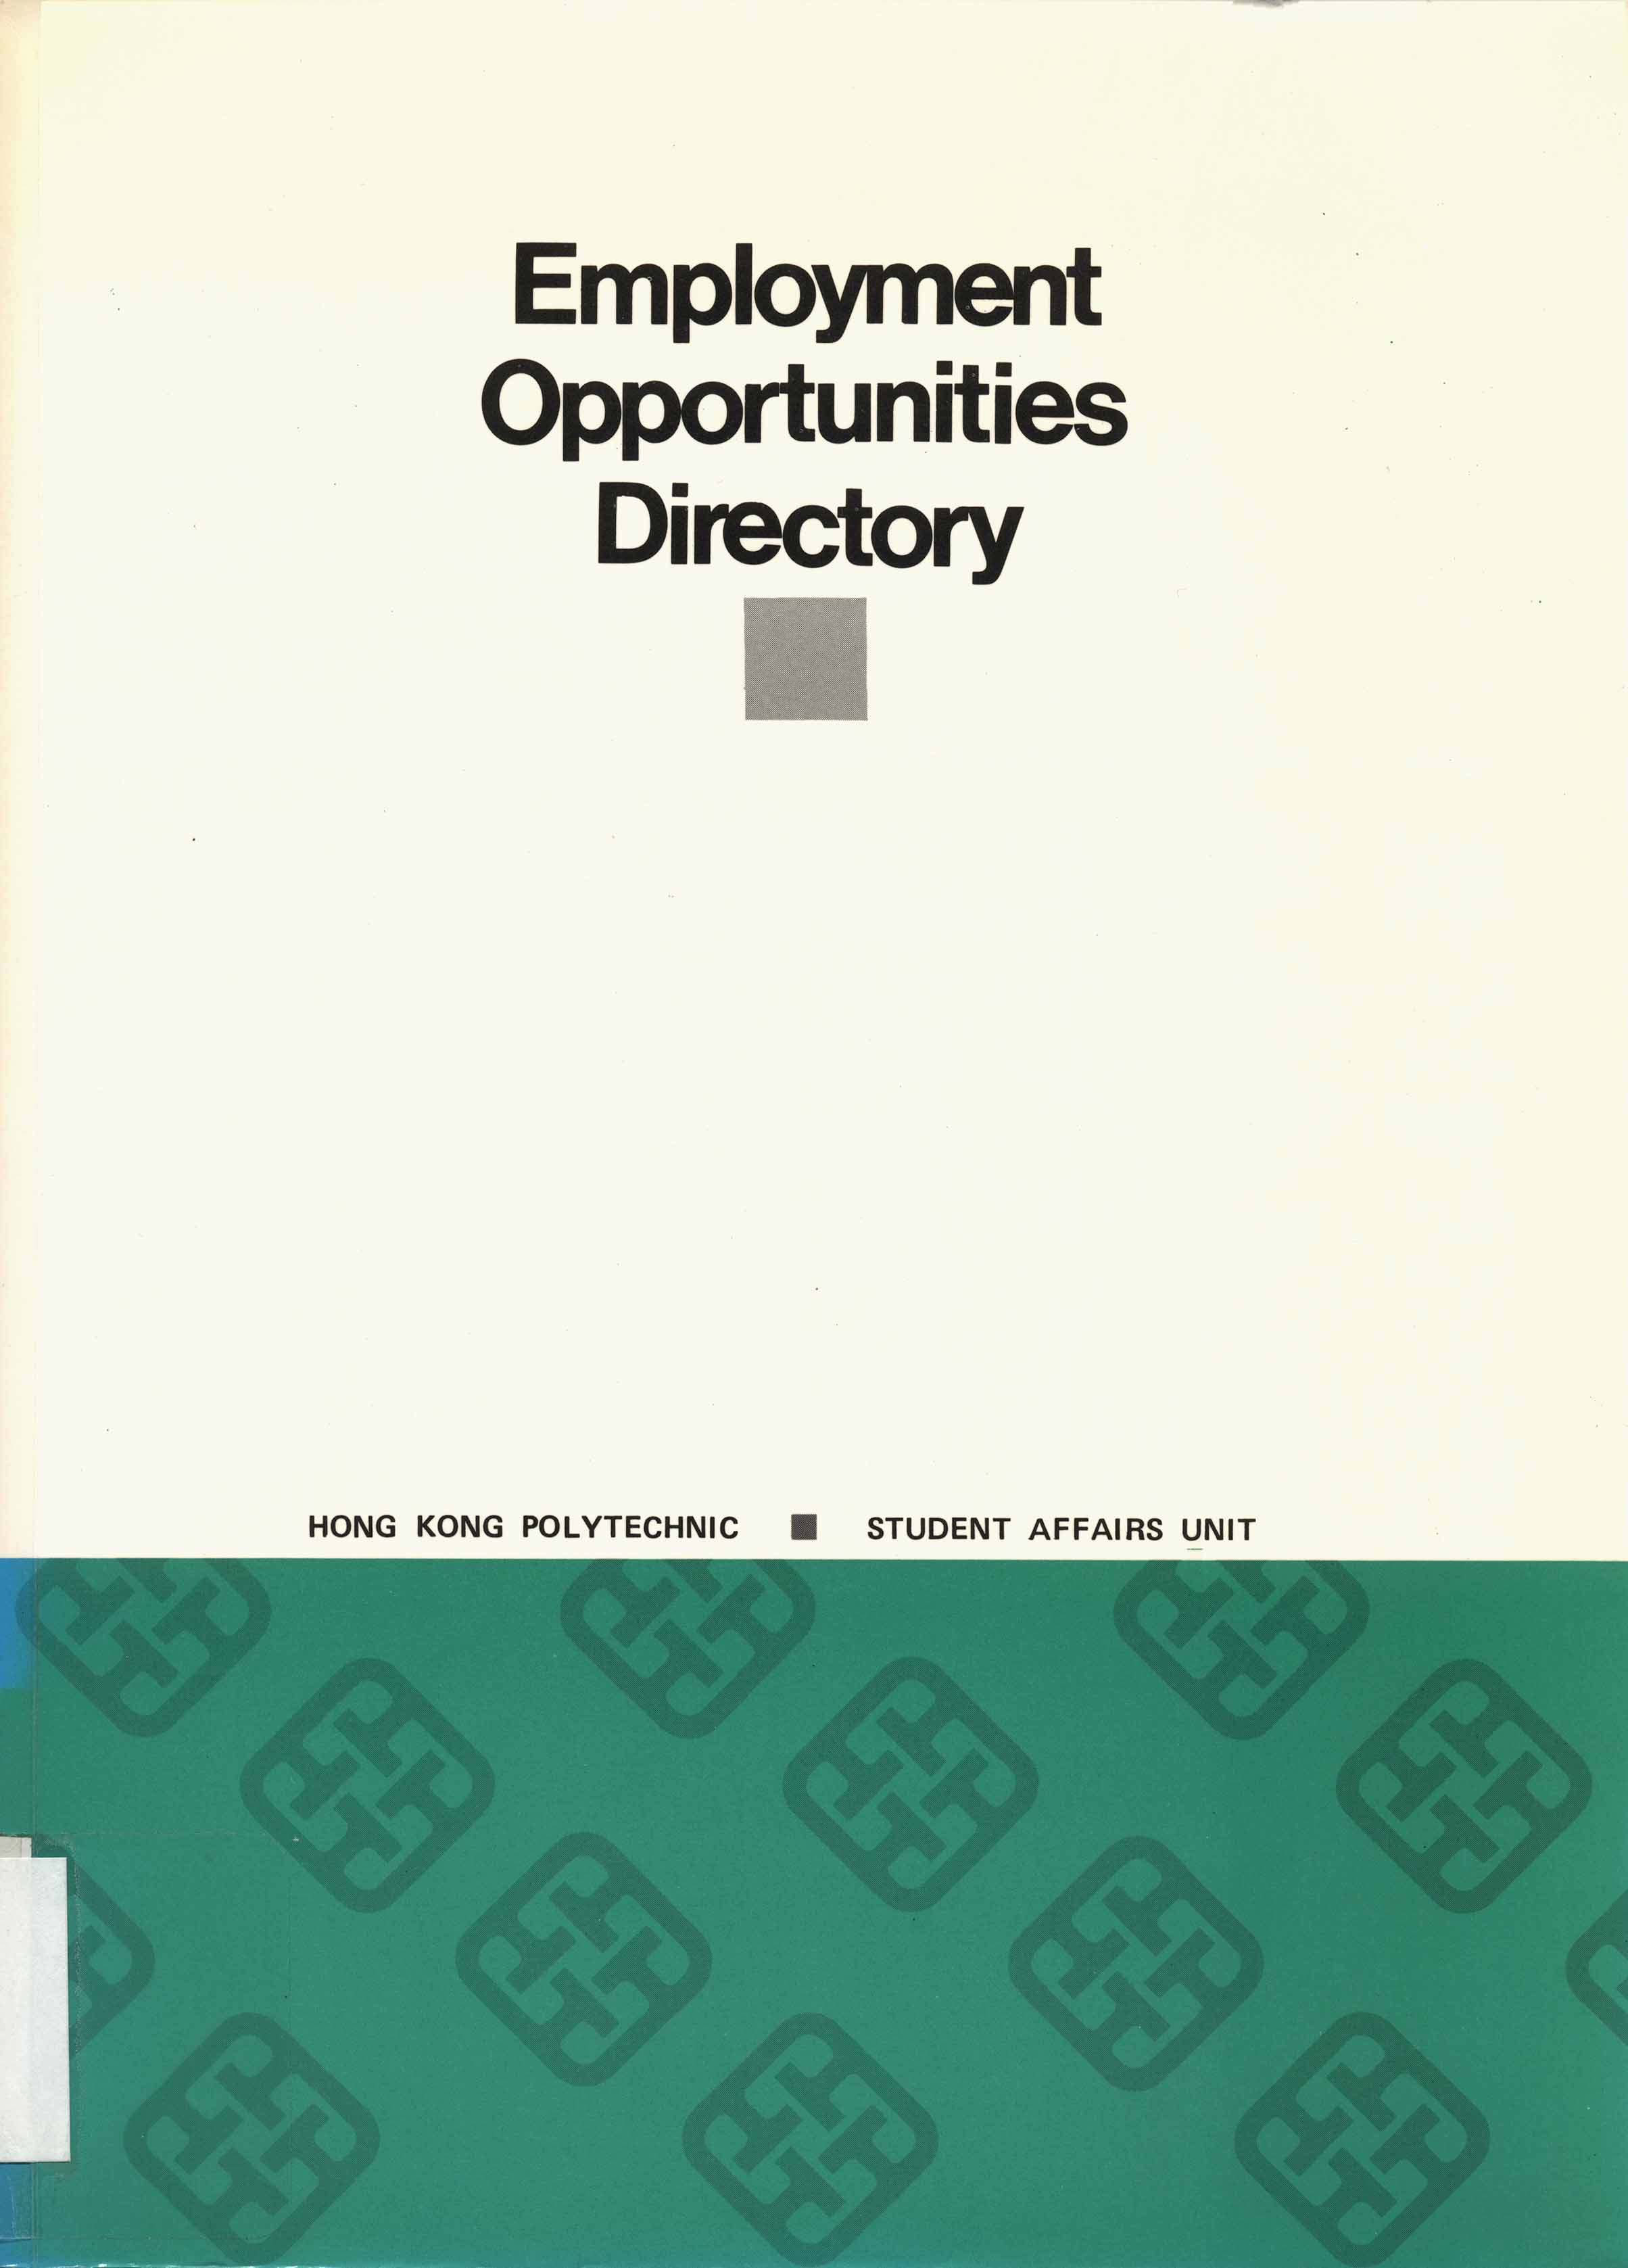 Employment opportunities directory [1986]